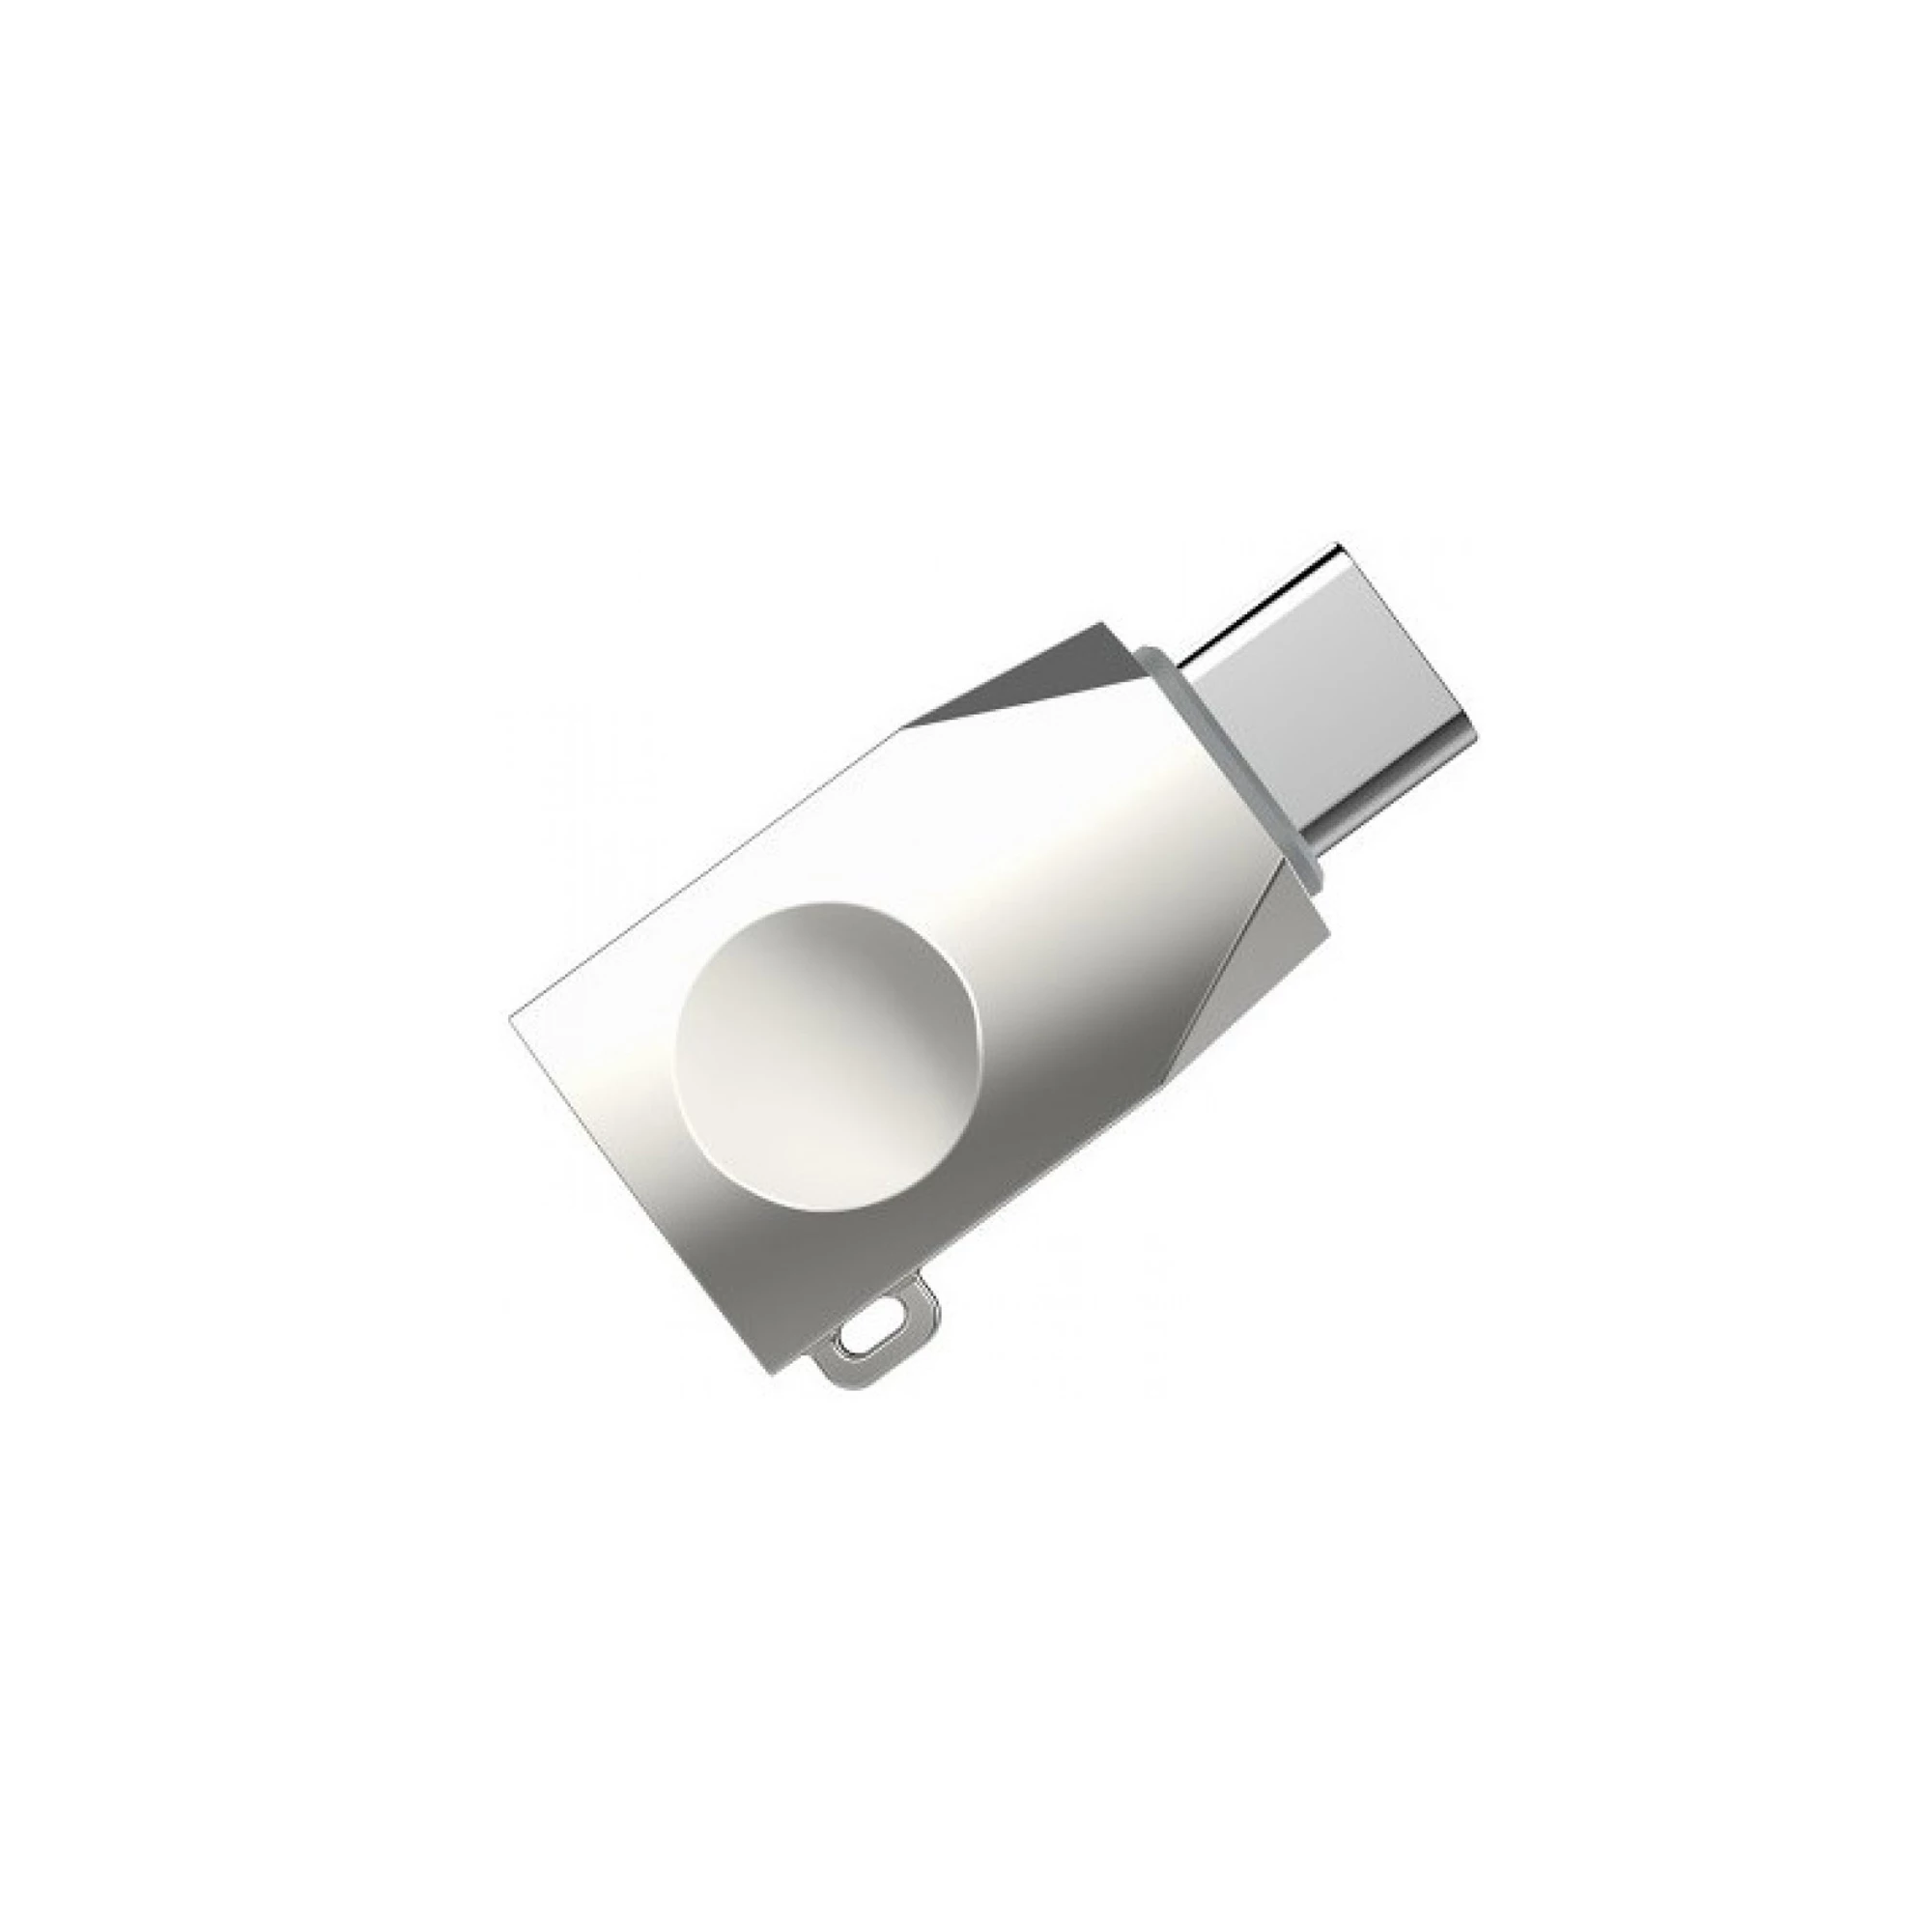 Hoco USB 3.1 USB-C Type C to USB 3.0 Metallic